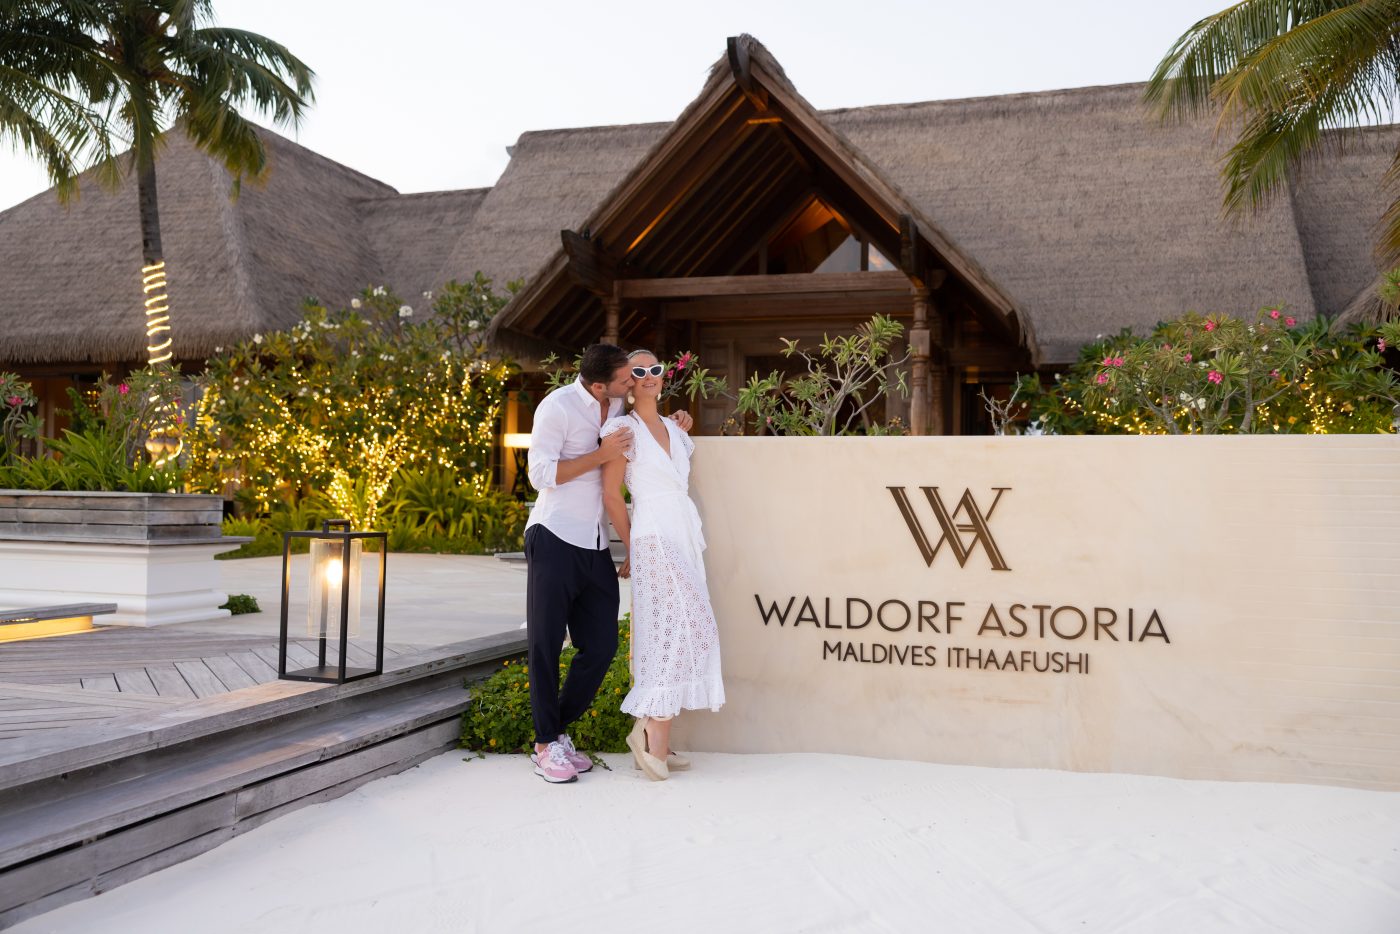 My Dream Honeymoon: Maldives